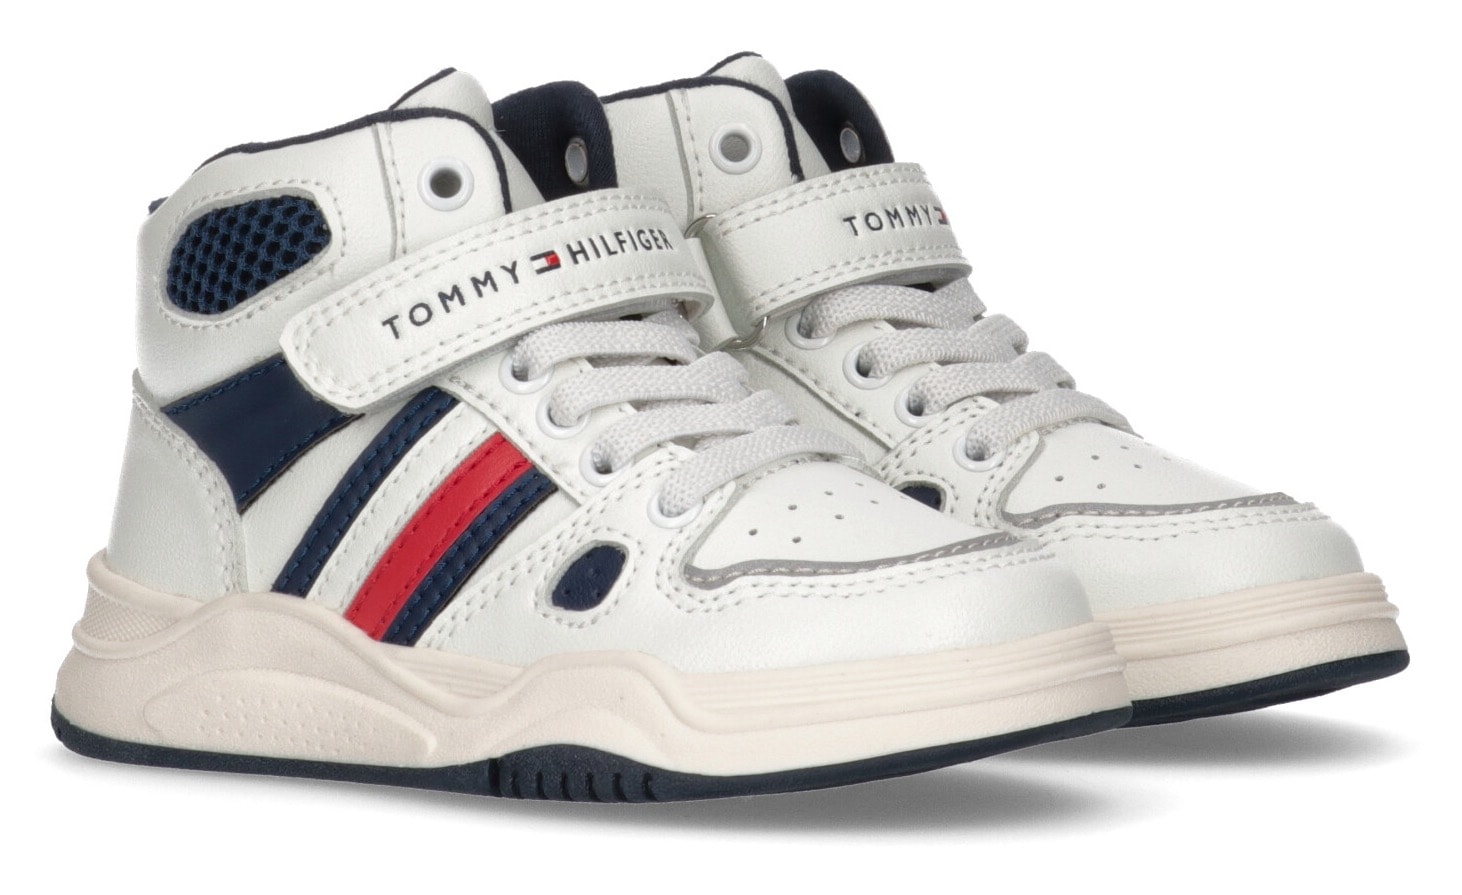 Trendige Tommy Hilfiger Sneaker cooler HIGH SNEAKER«, »STRIPES TOP ohne bestellen Farbkombi in Mindestbestellwert LACE-UP/VELCRO